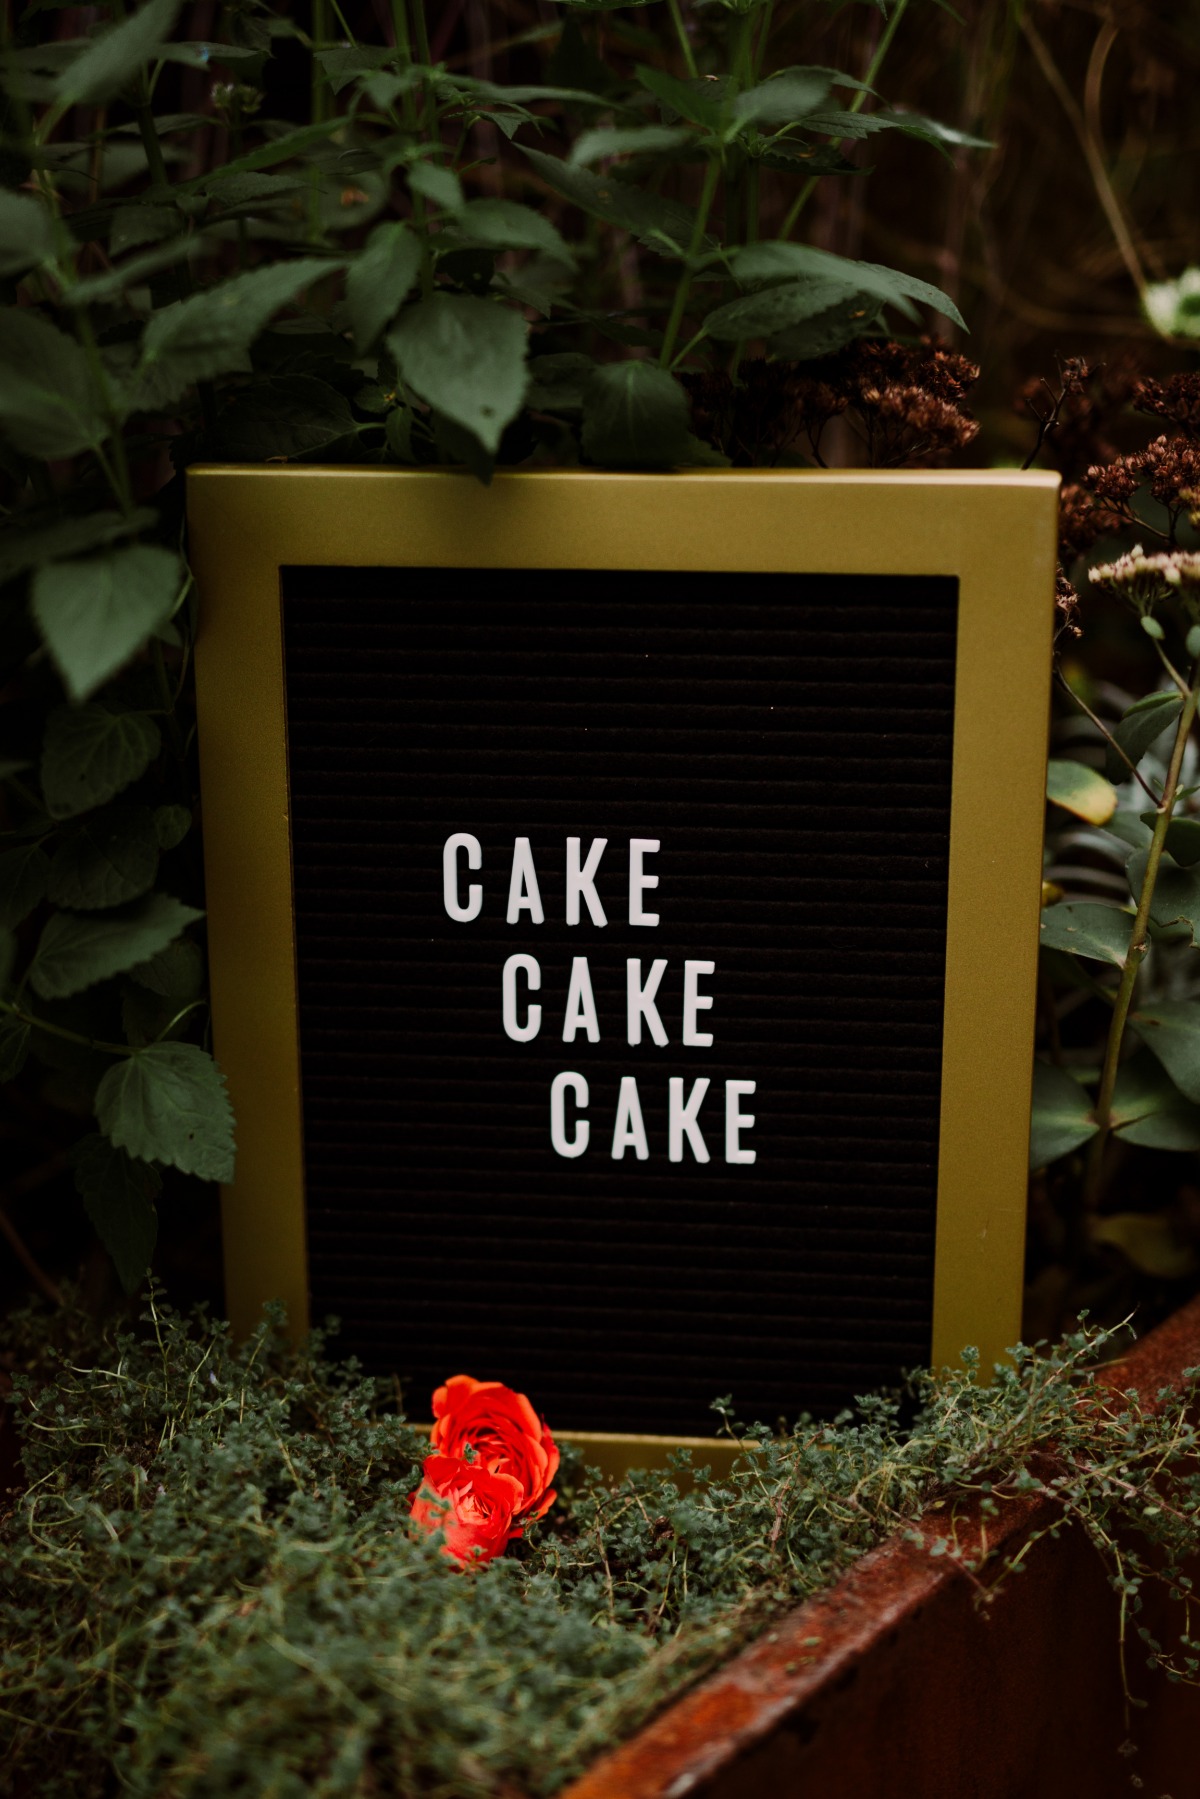 Cake cake cake